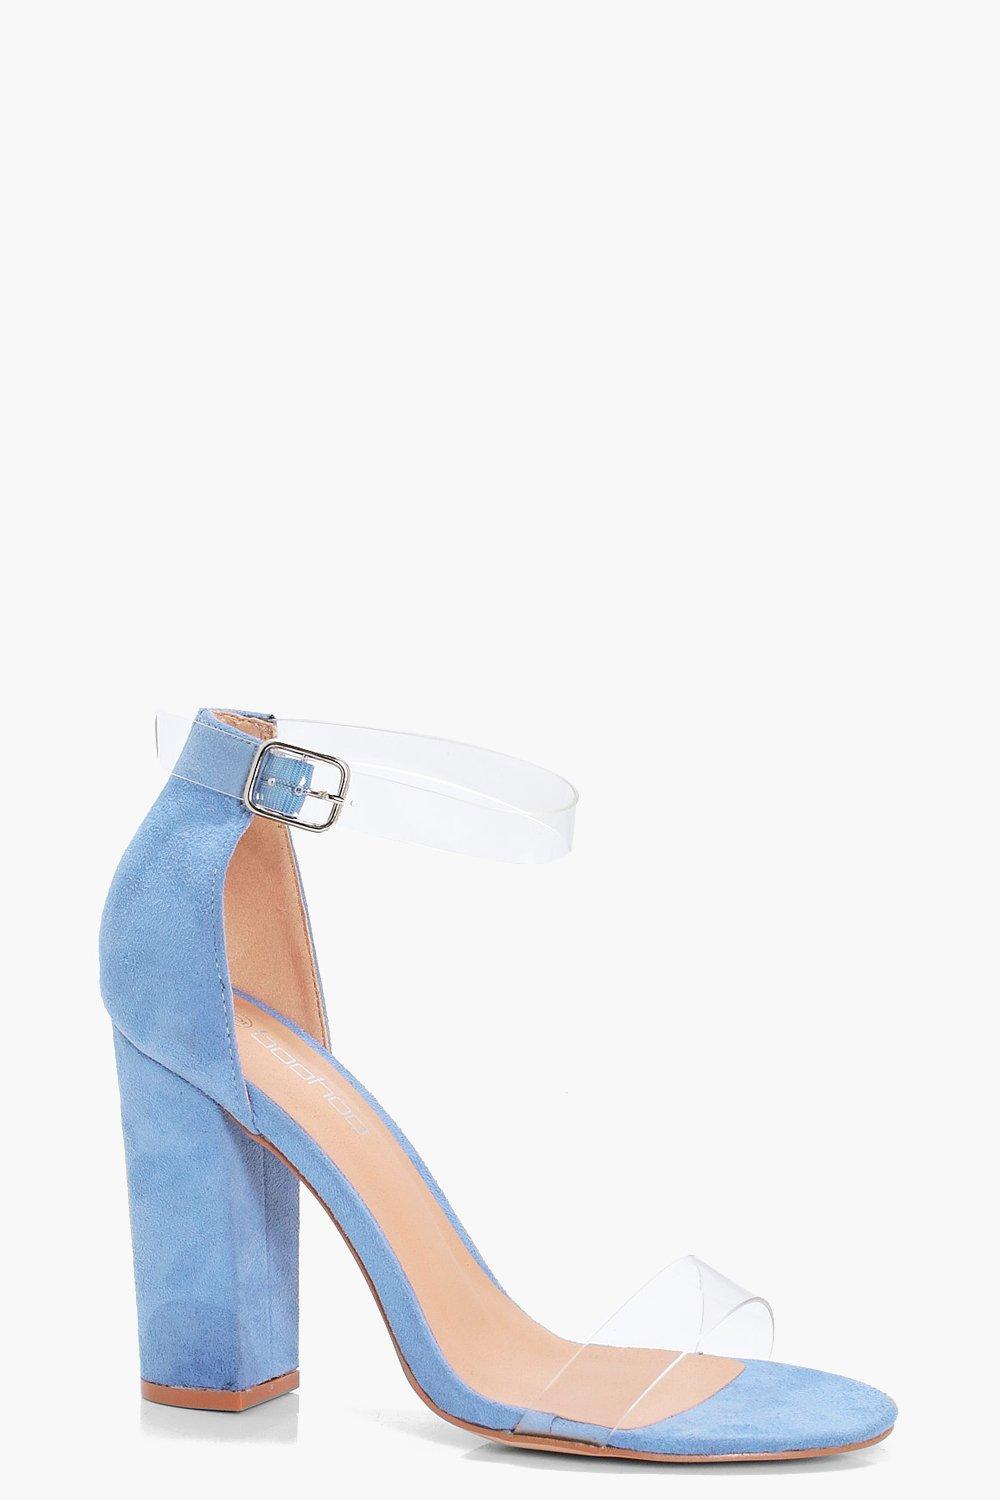 blue heels wide fit